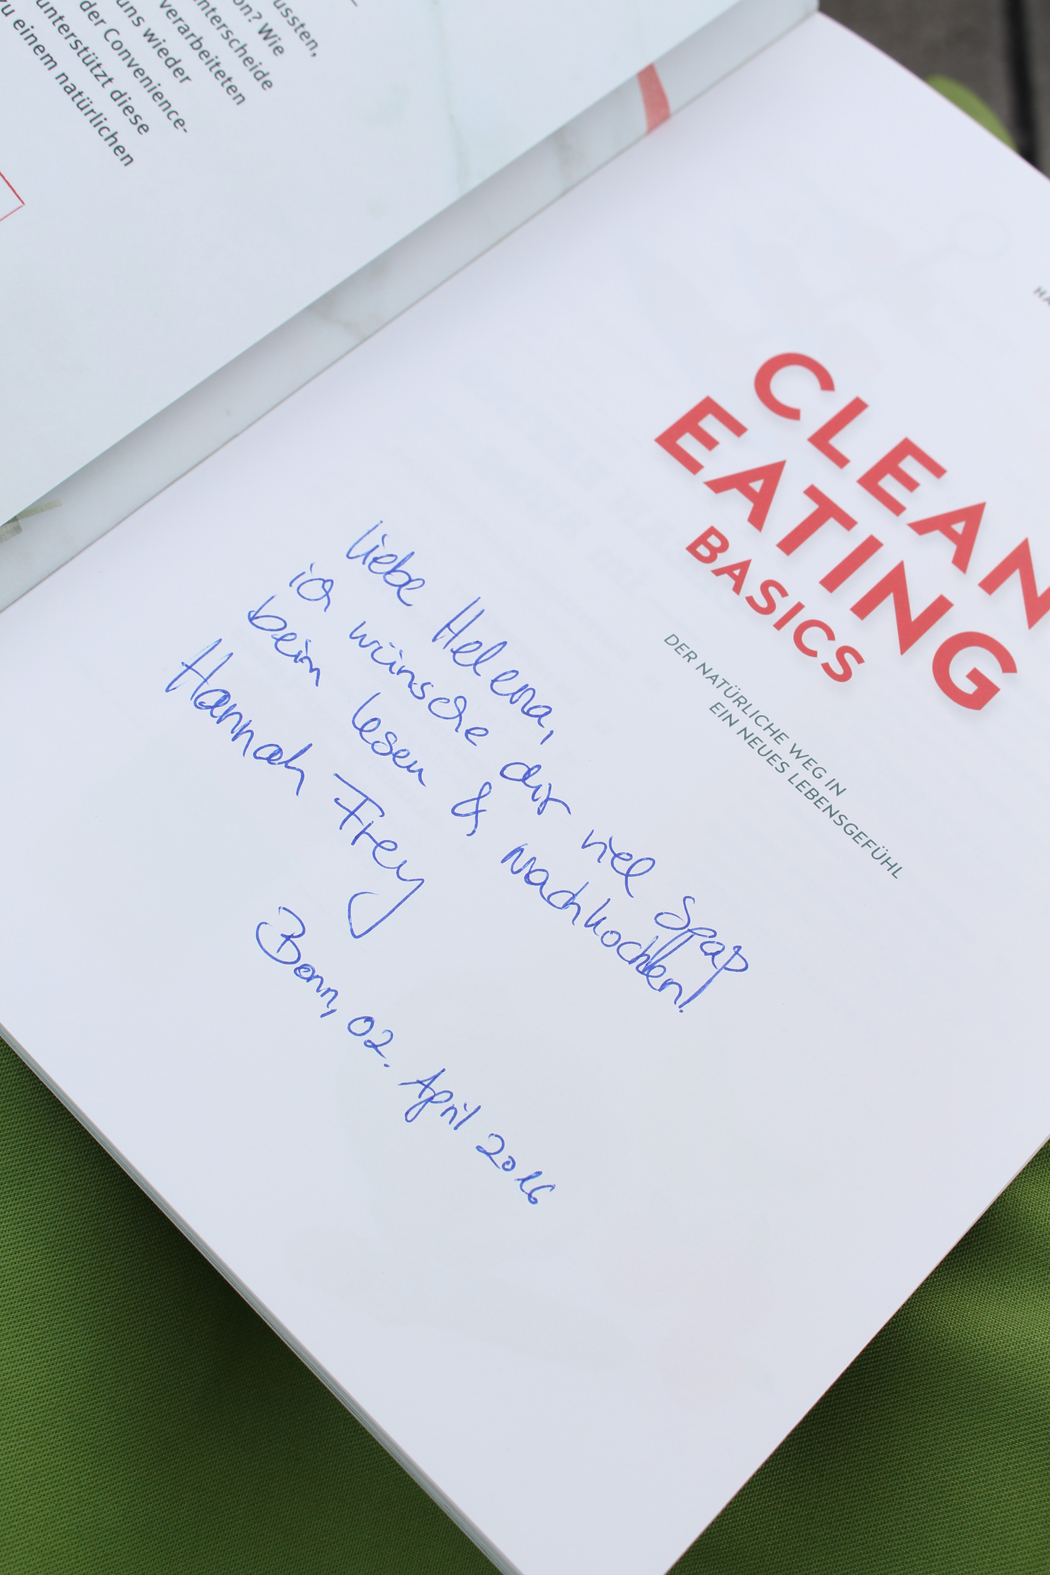 Clean Eating Basics Workshop Chefkoch29